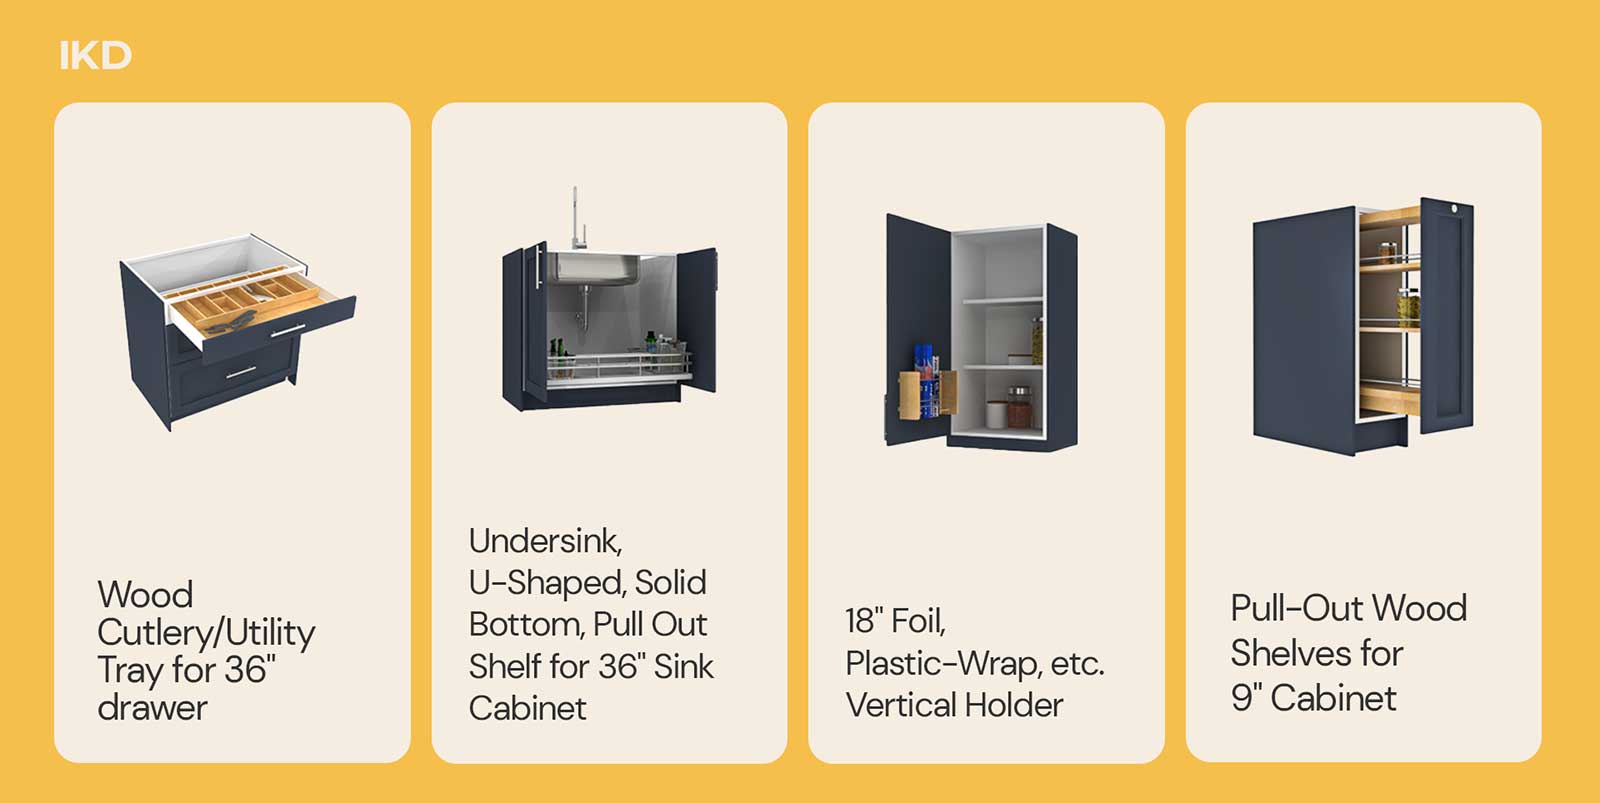 IKEA's Internal Organizers vs. IKD's Rev-A-Shelf Organizers